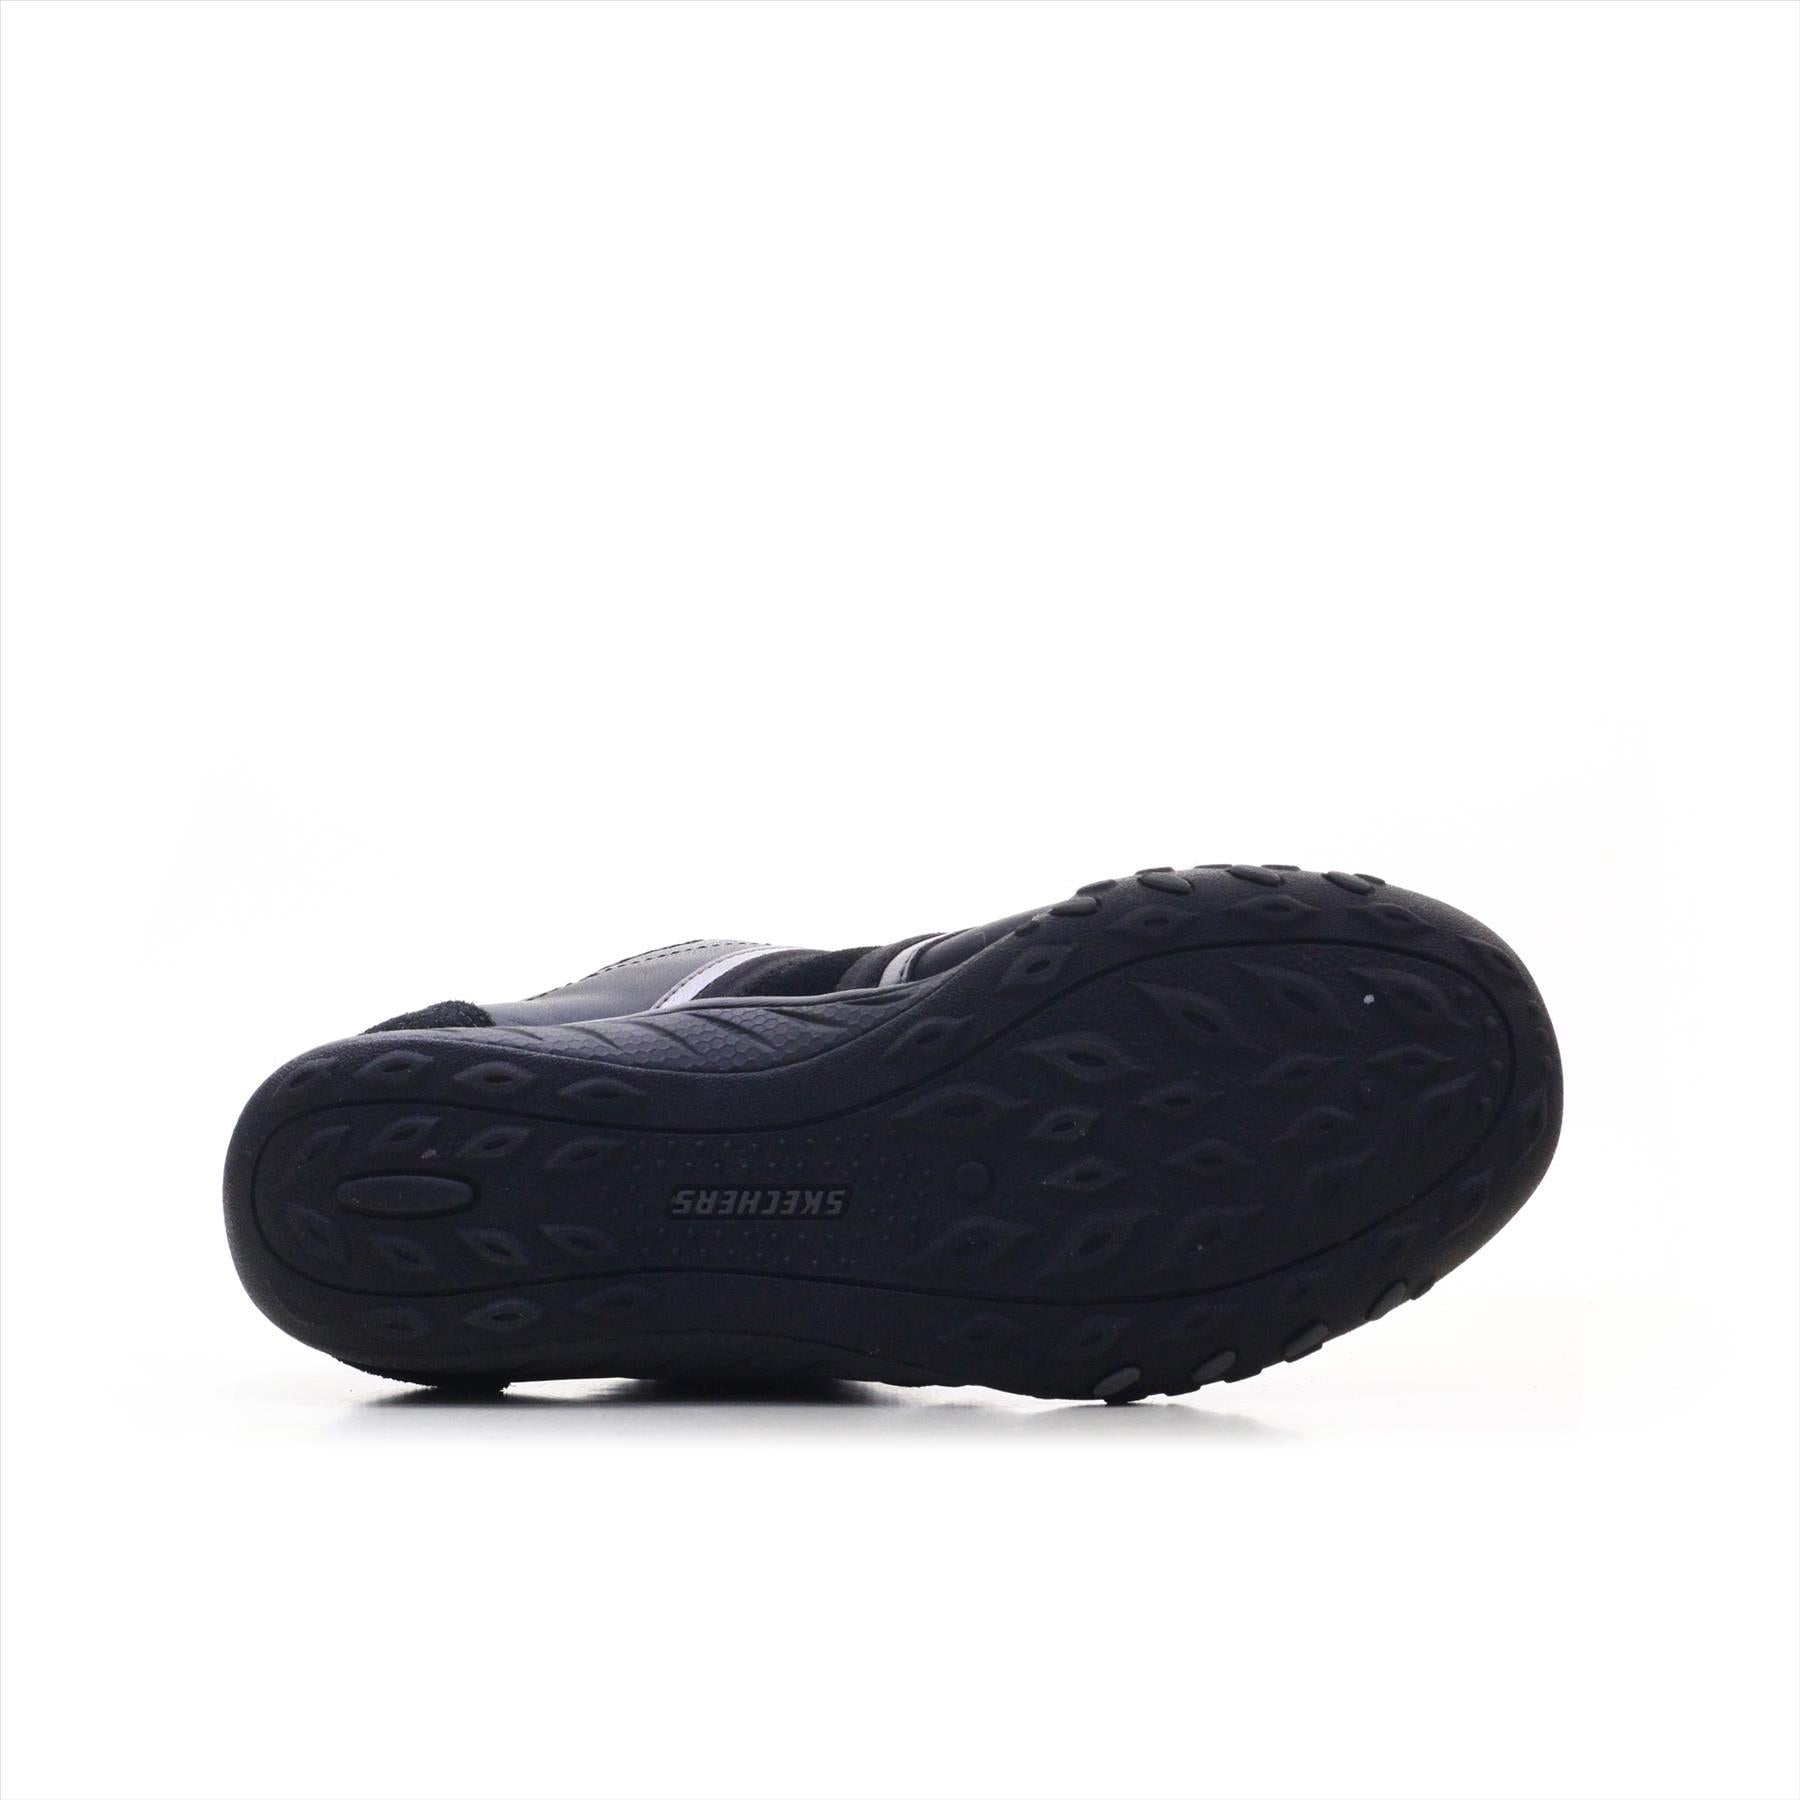 Skechers Relaxed Fit Memory Foam (ORIGINAL)